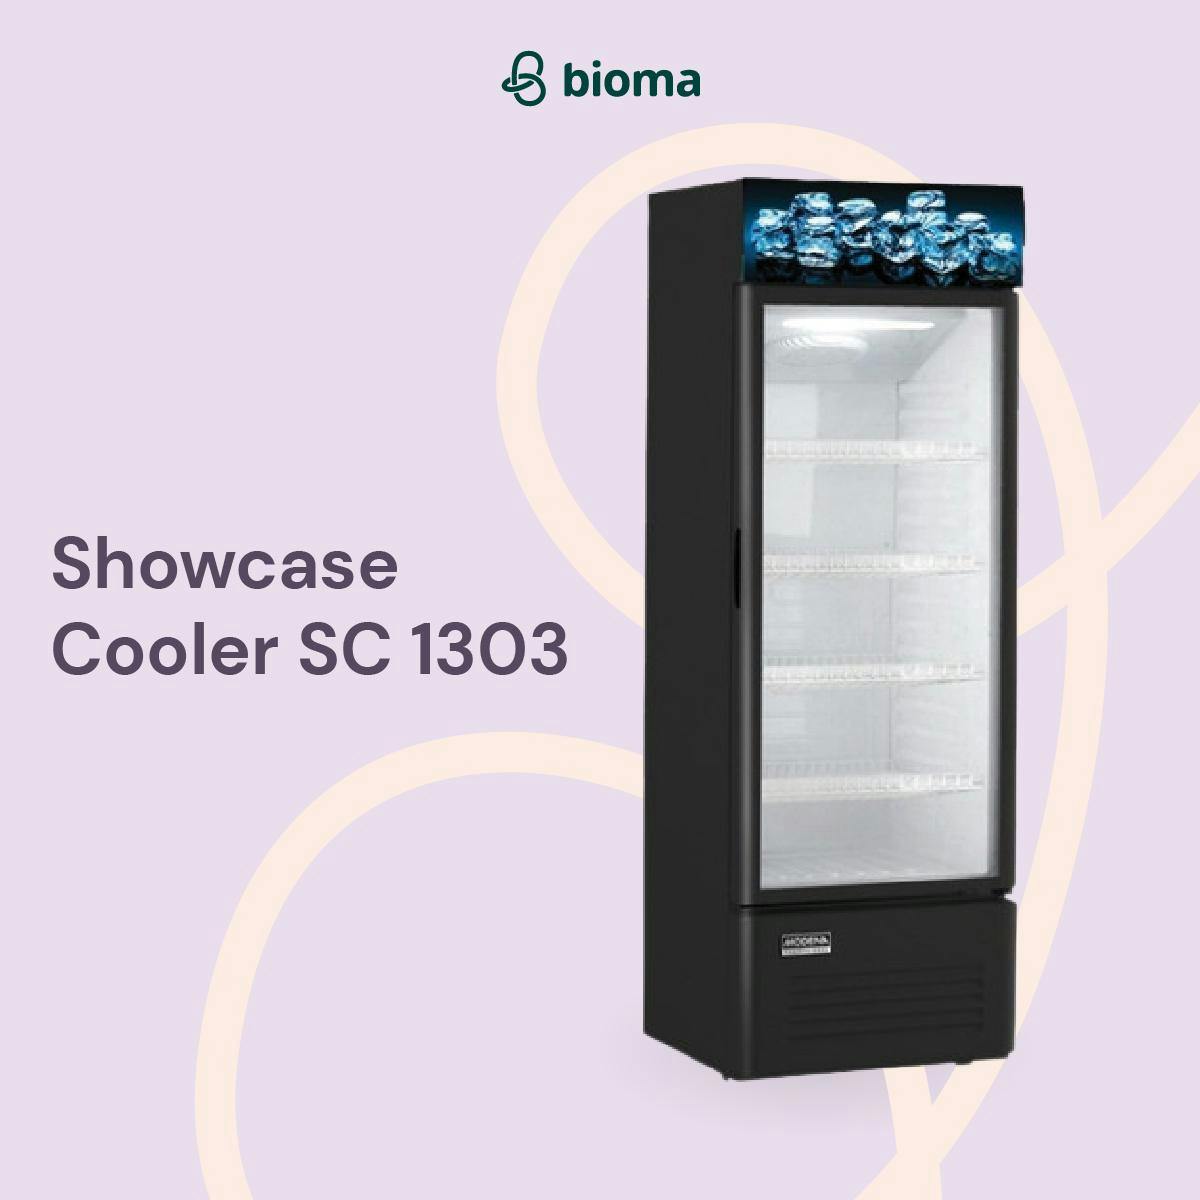 Showcase Cooler SC 1303